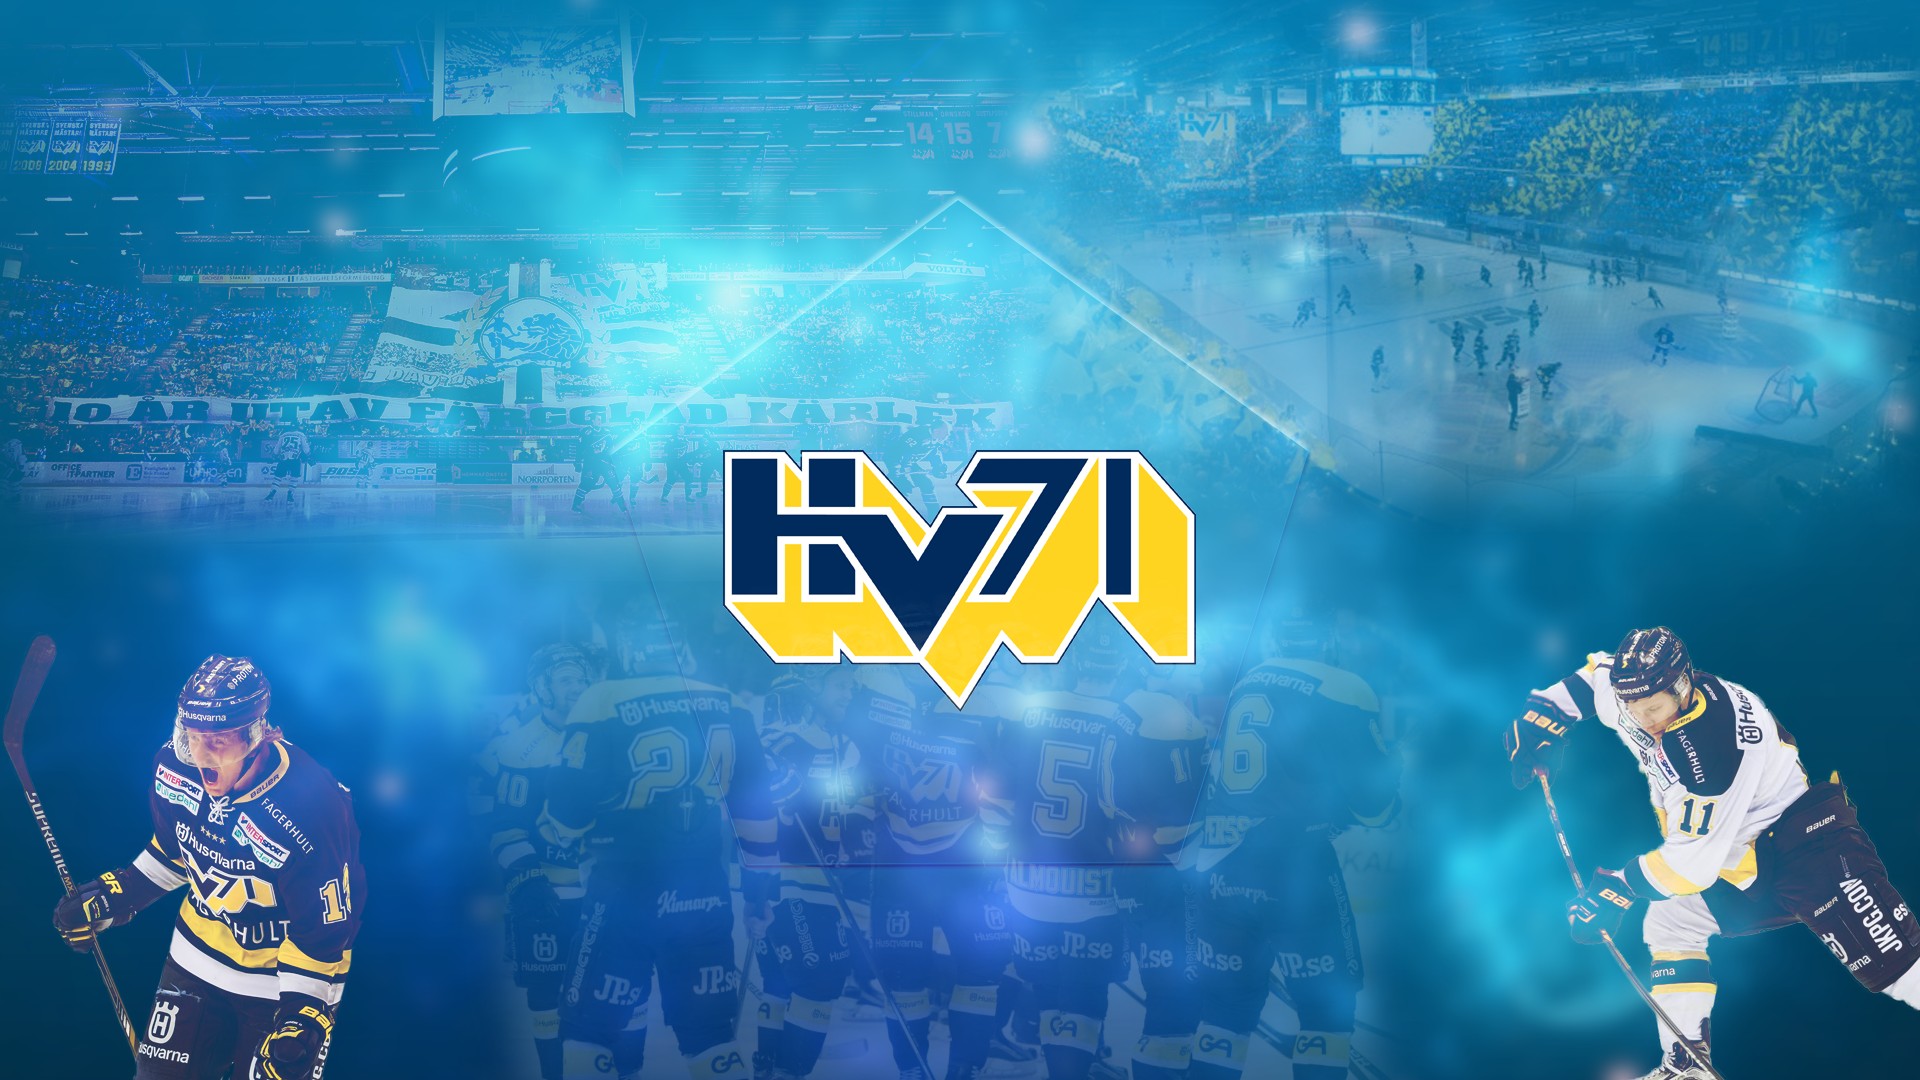 HV71, Ice hockey Wallpaper